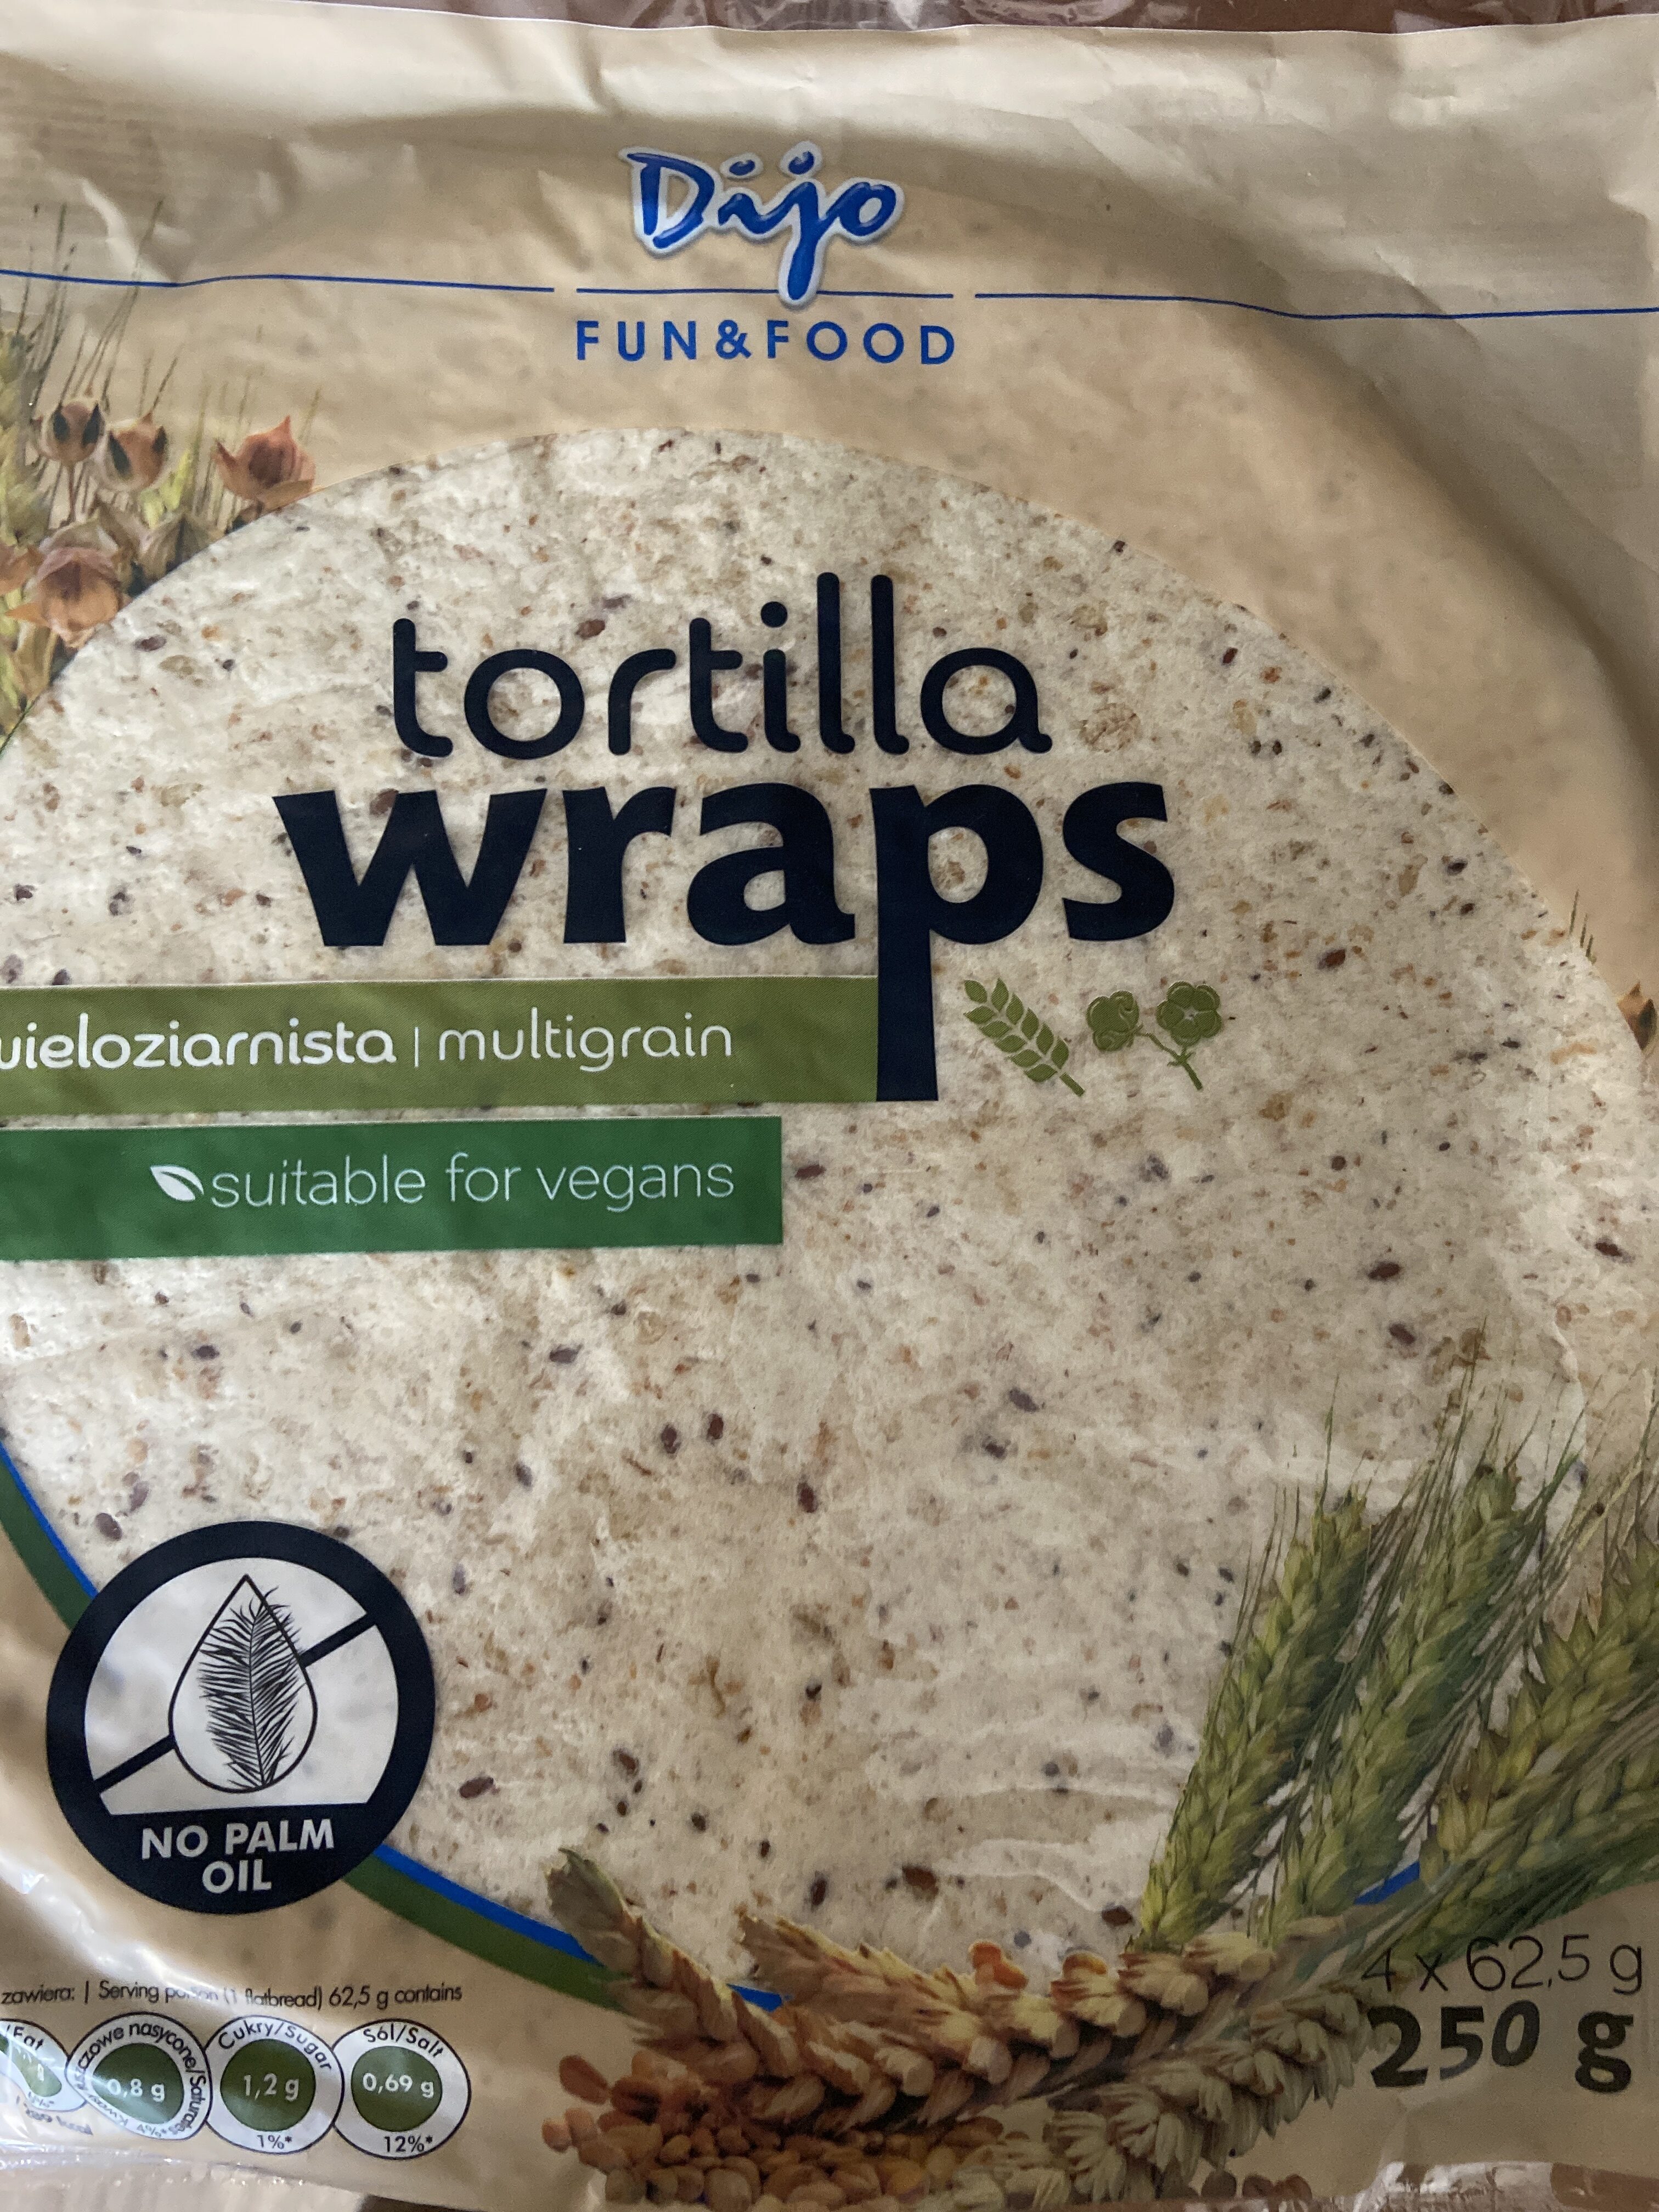 Tortilla wraca - Product - pl